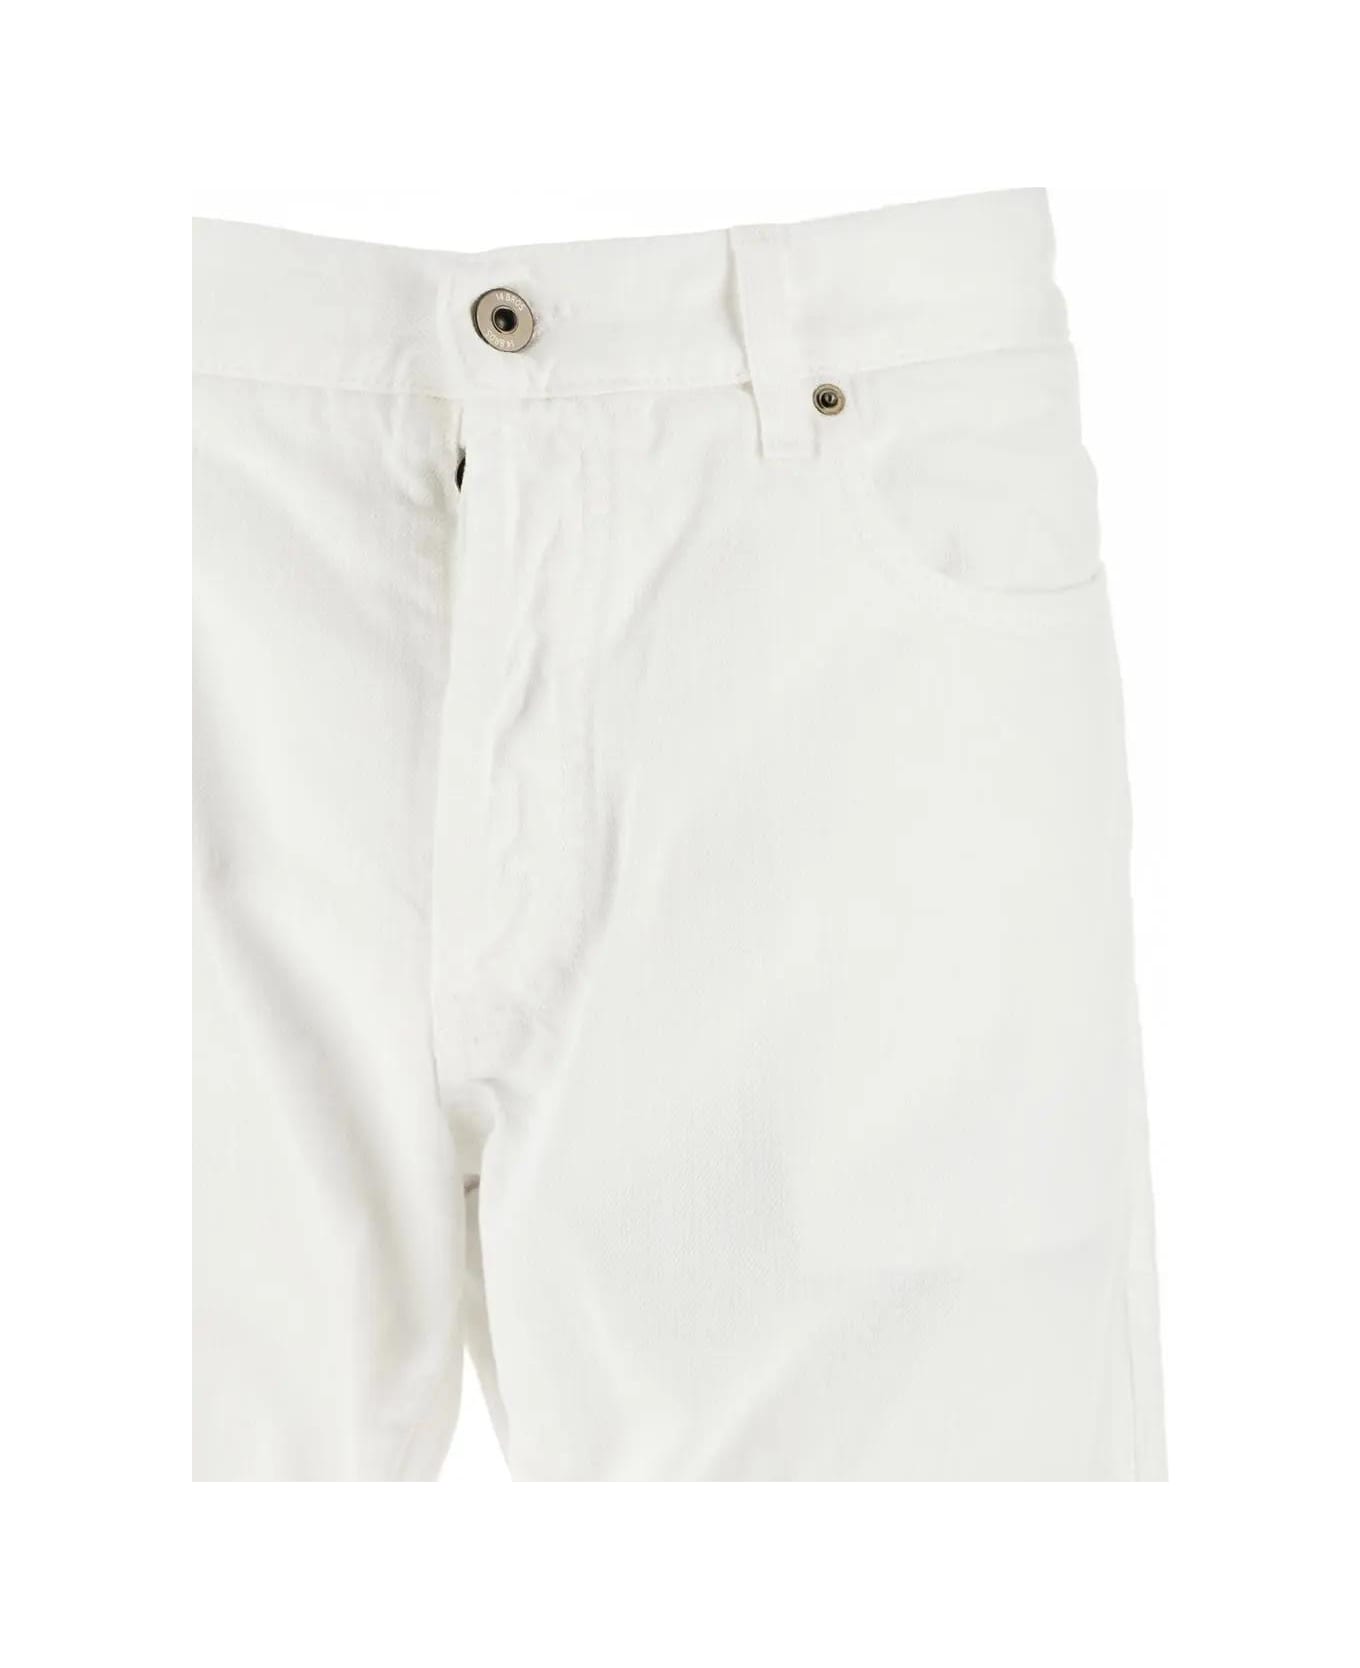 14 Bros Cheswick Jeans - White